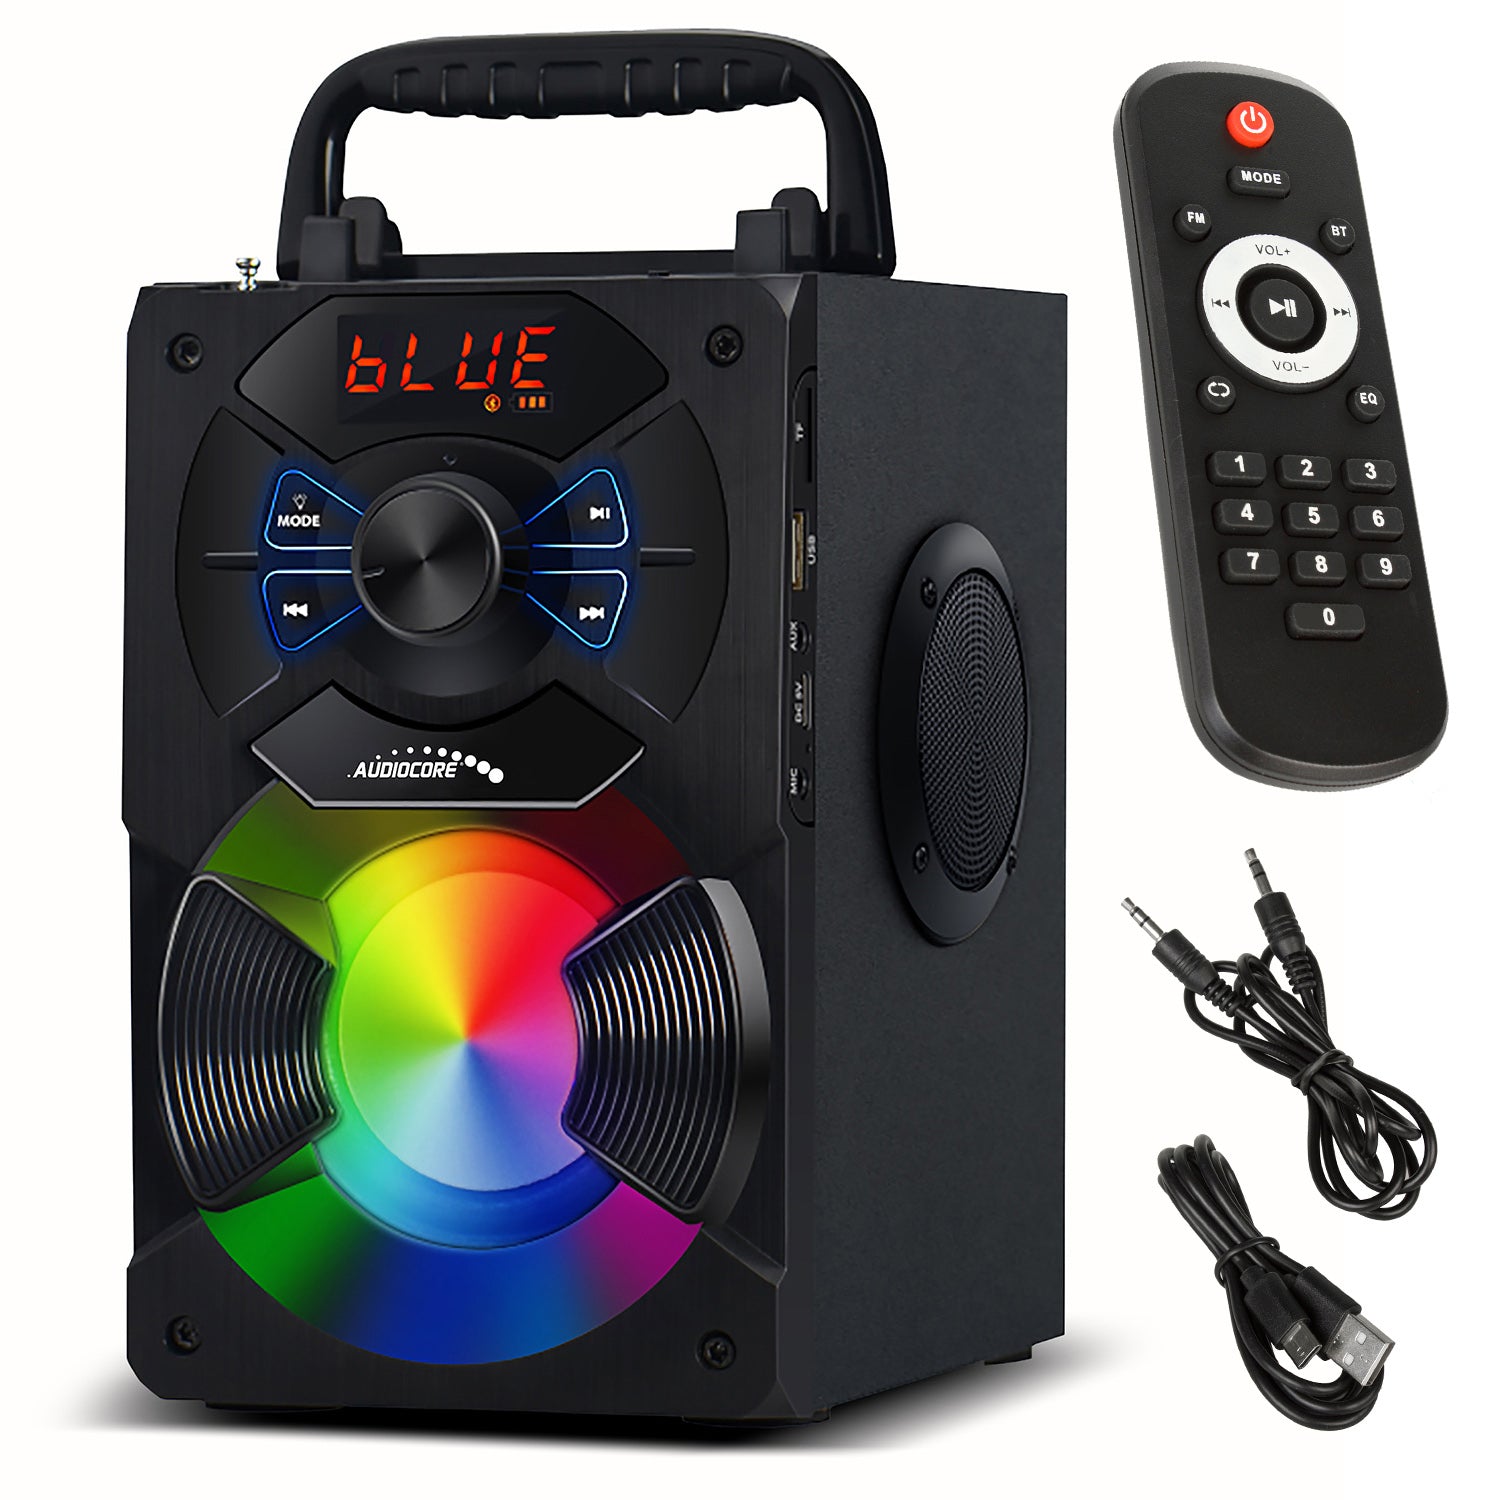 Audiocore AC9720 Autoradio (Radio Bluetooth-Multicolor-Technologie